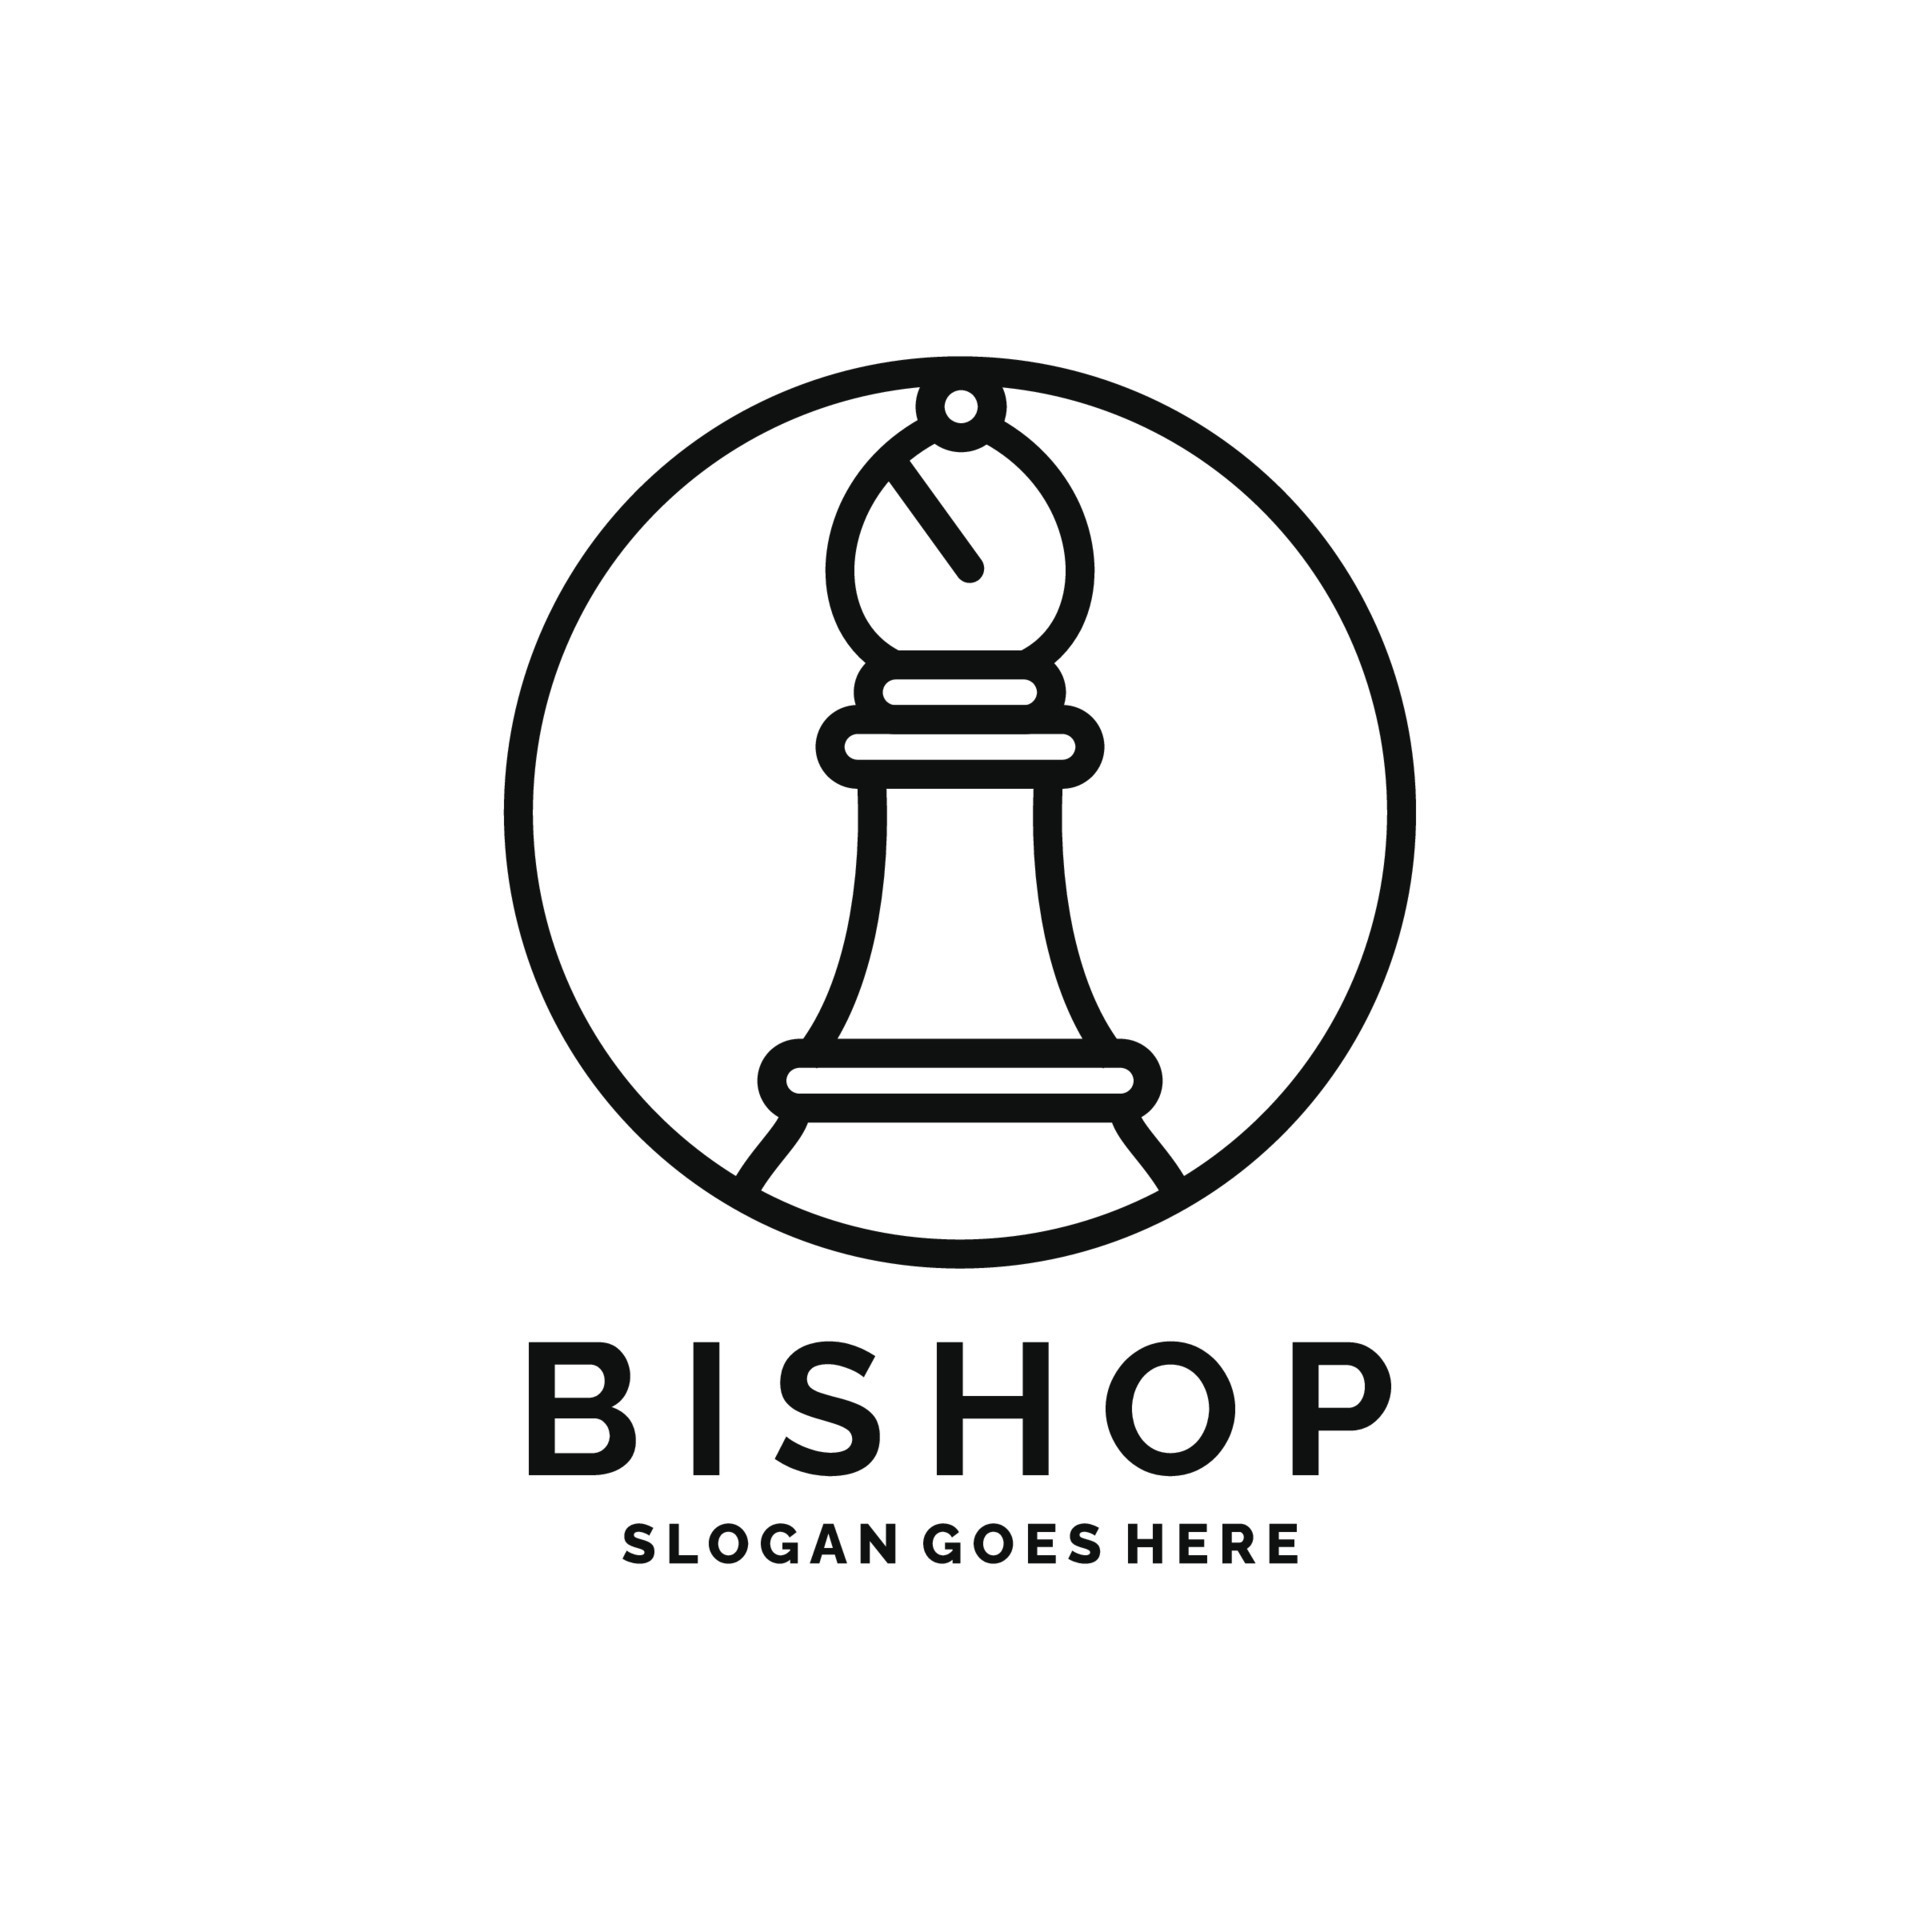 ícone do bispo de xadrez, estilo simples 14625671 Vetor no Vecteezy